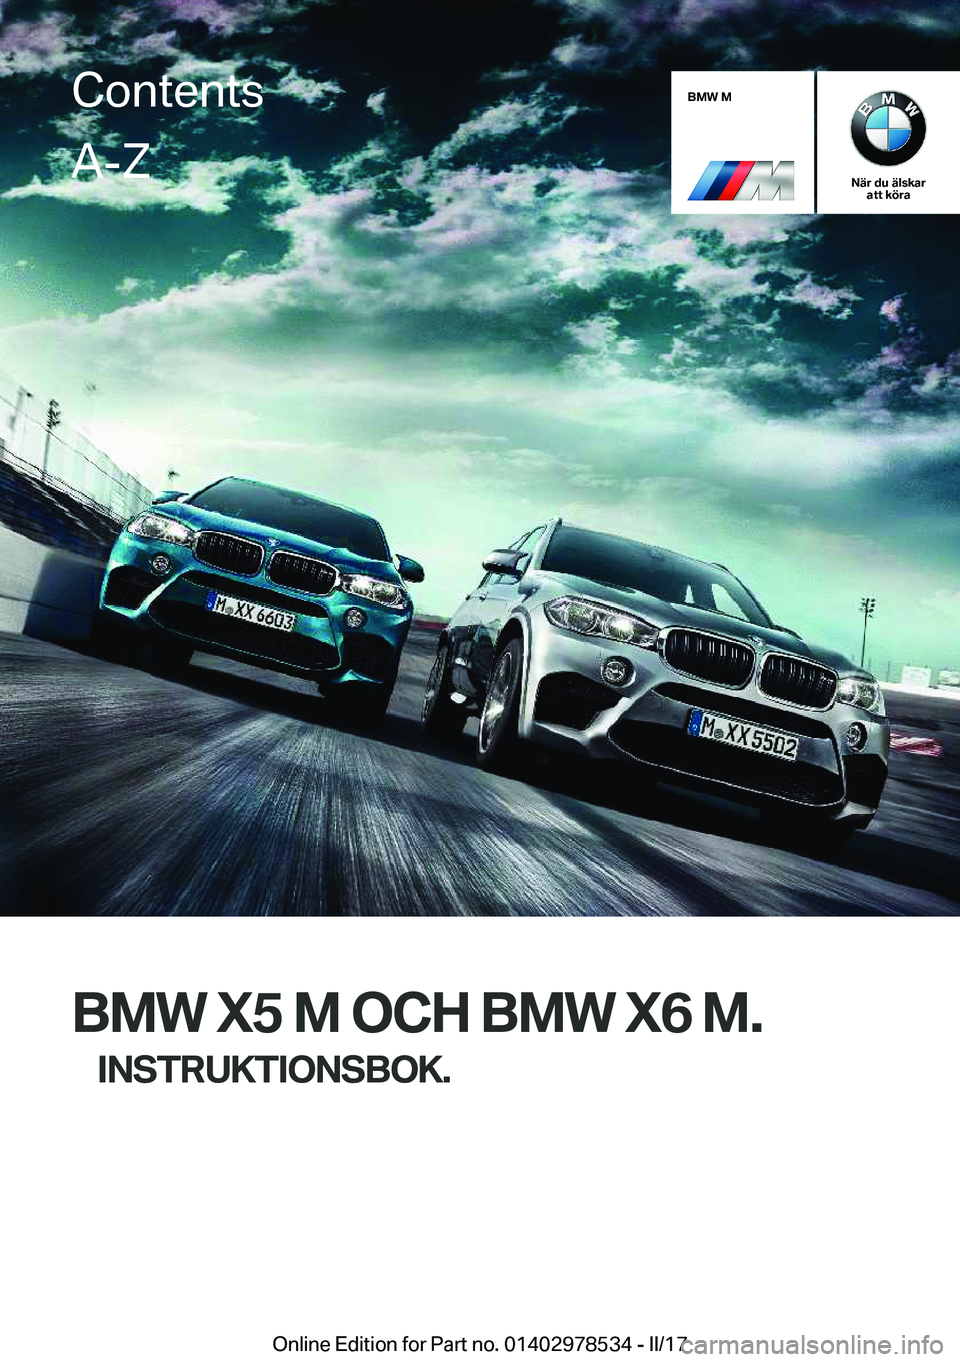 BMW X6 M 2017  InstruktionsbÖcker (in Swedish) 